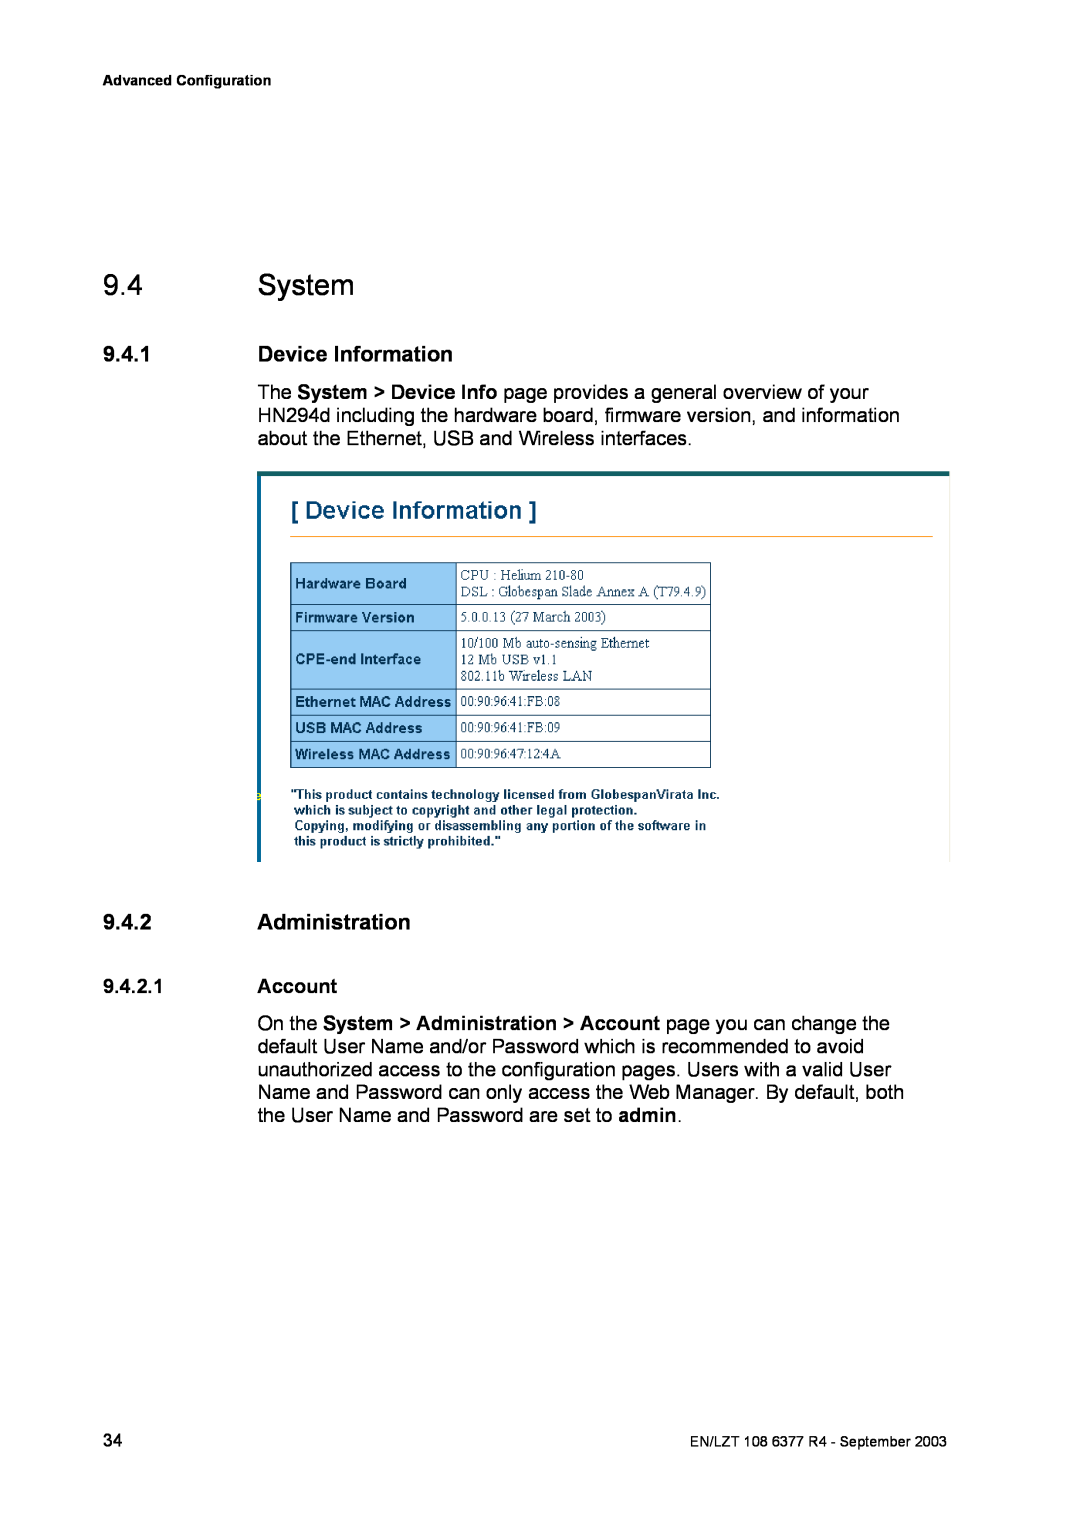 Garmin HN294DP/DI manual System, Device Information, Administration, Account 